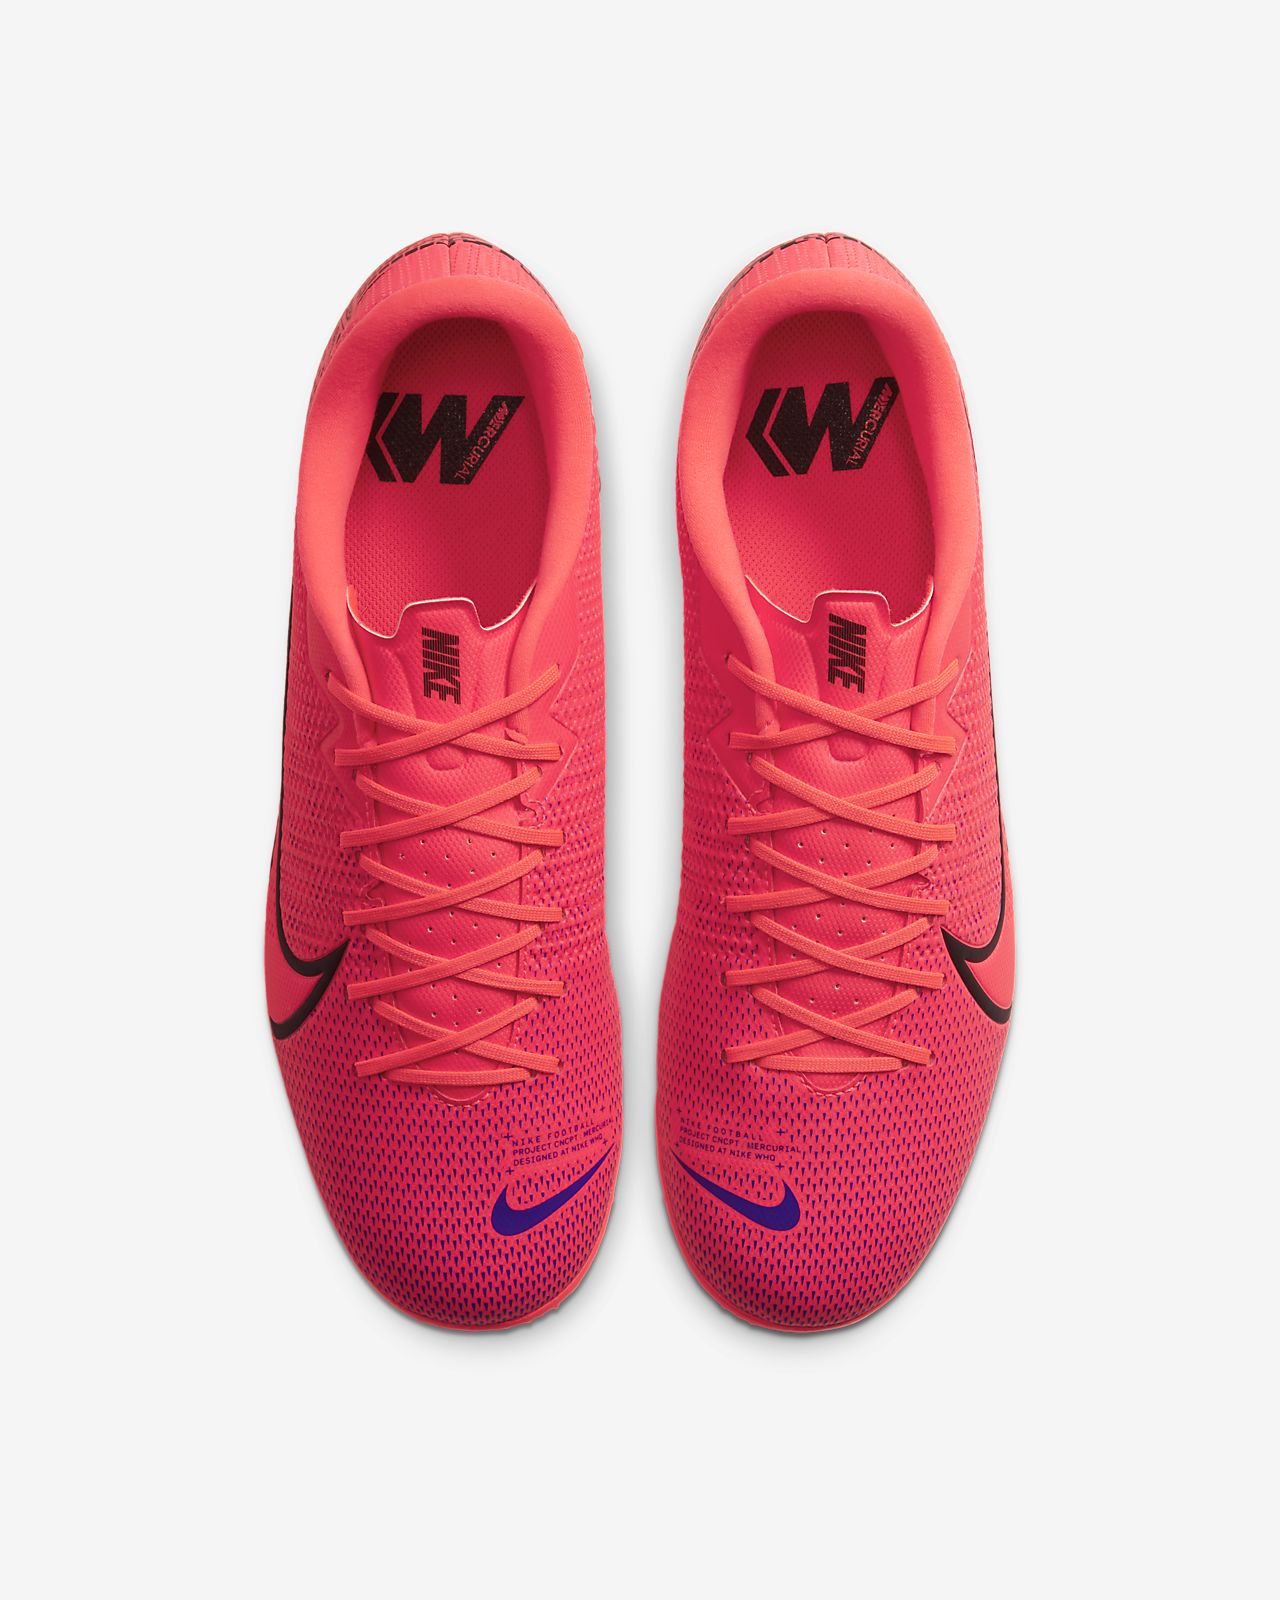 Football Soccer shoes !! Nike Mercurial Vapor 13. Shopee